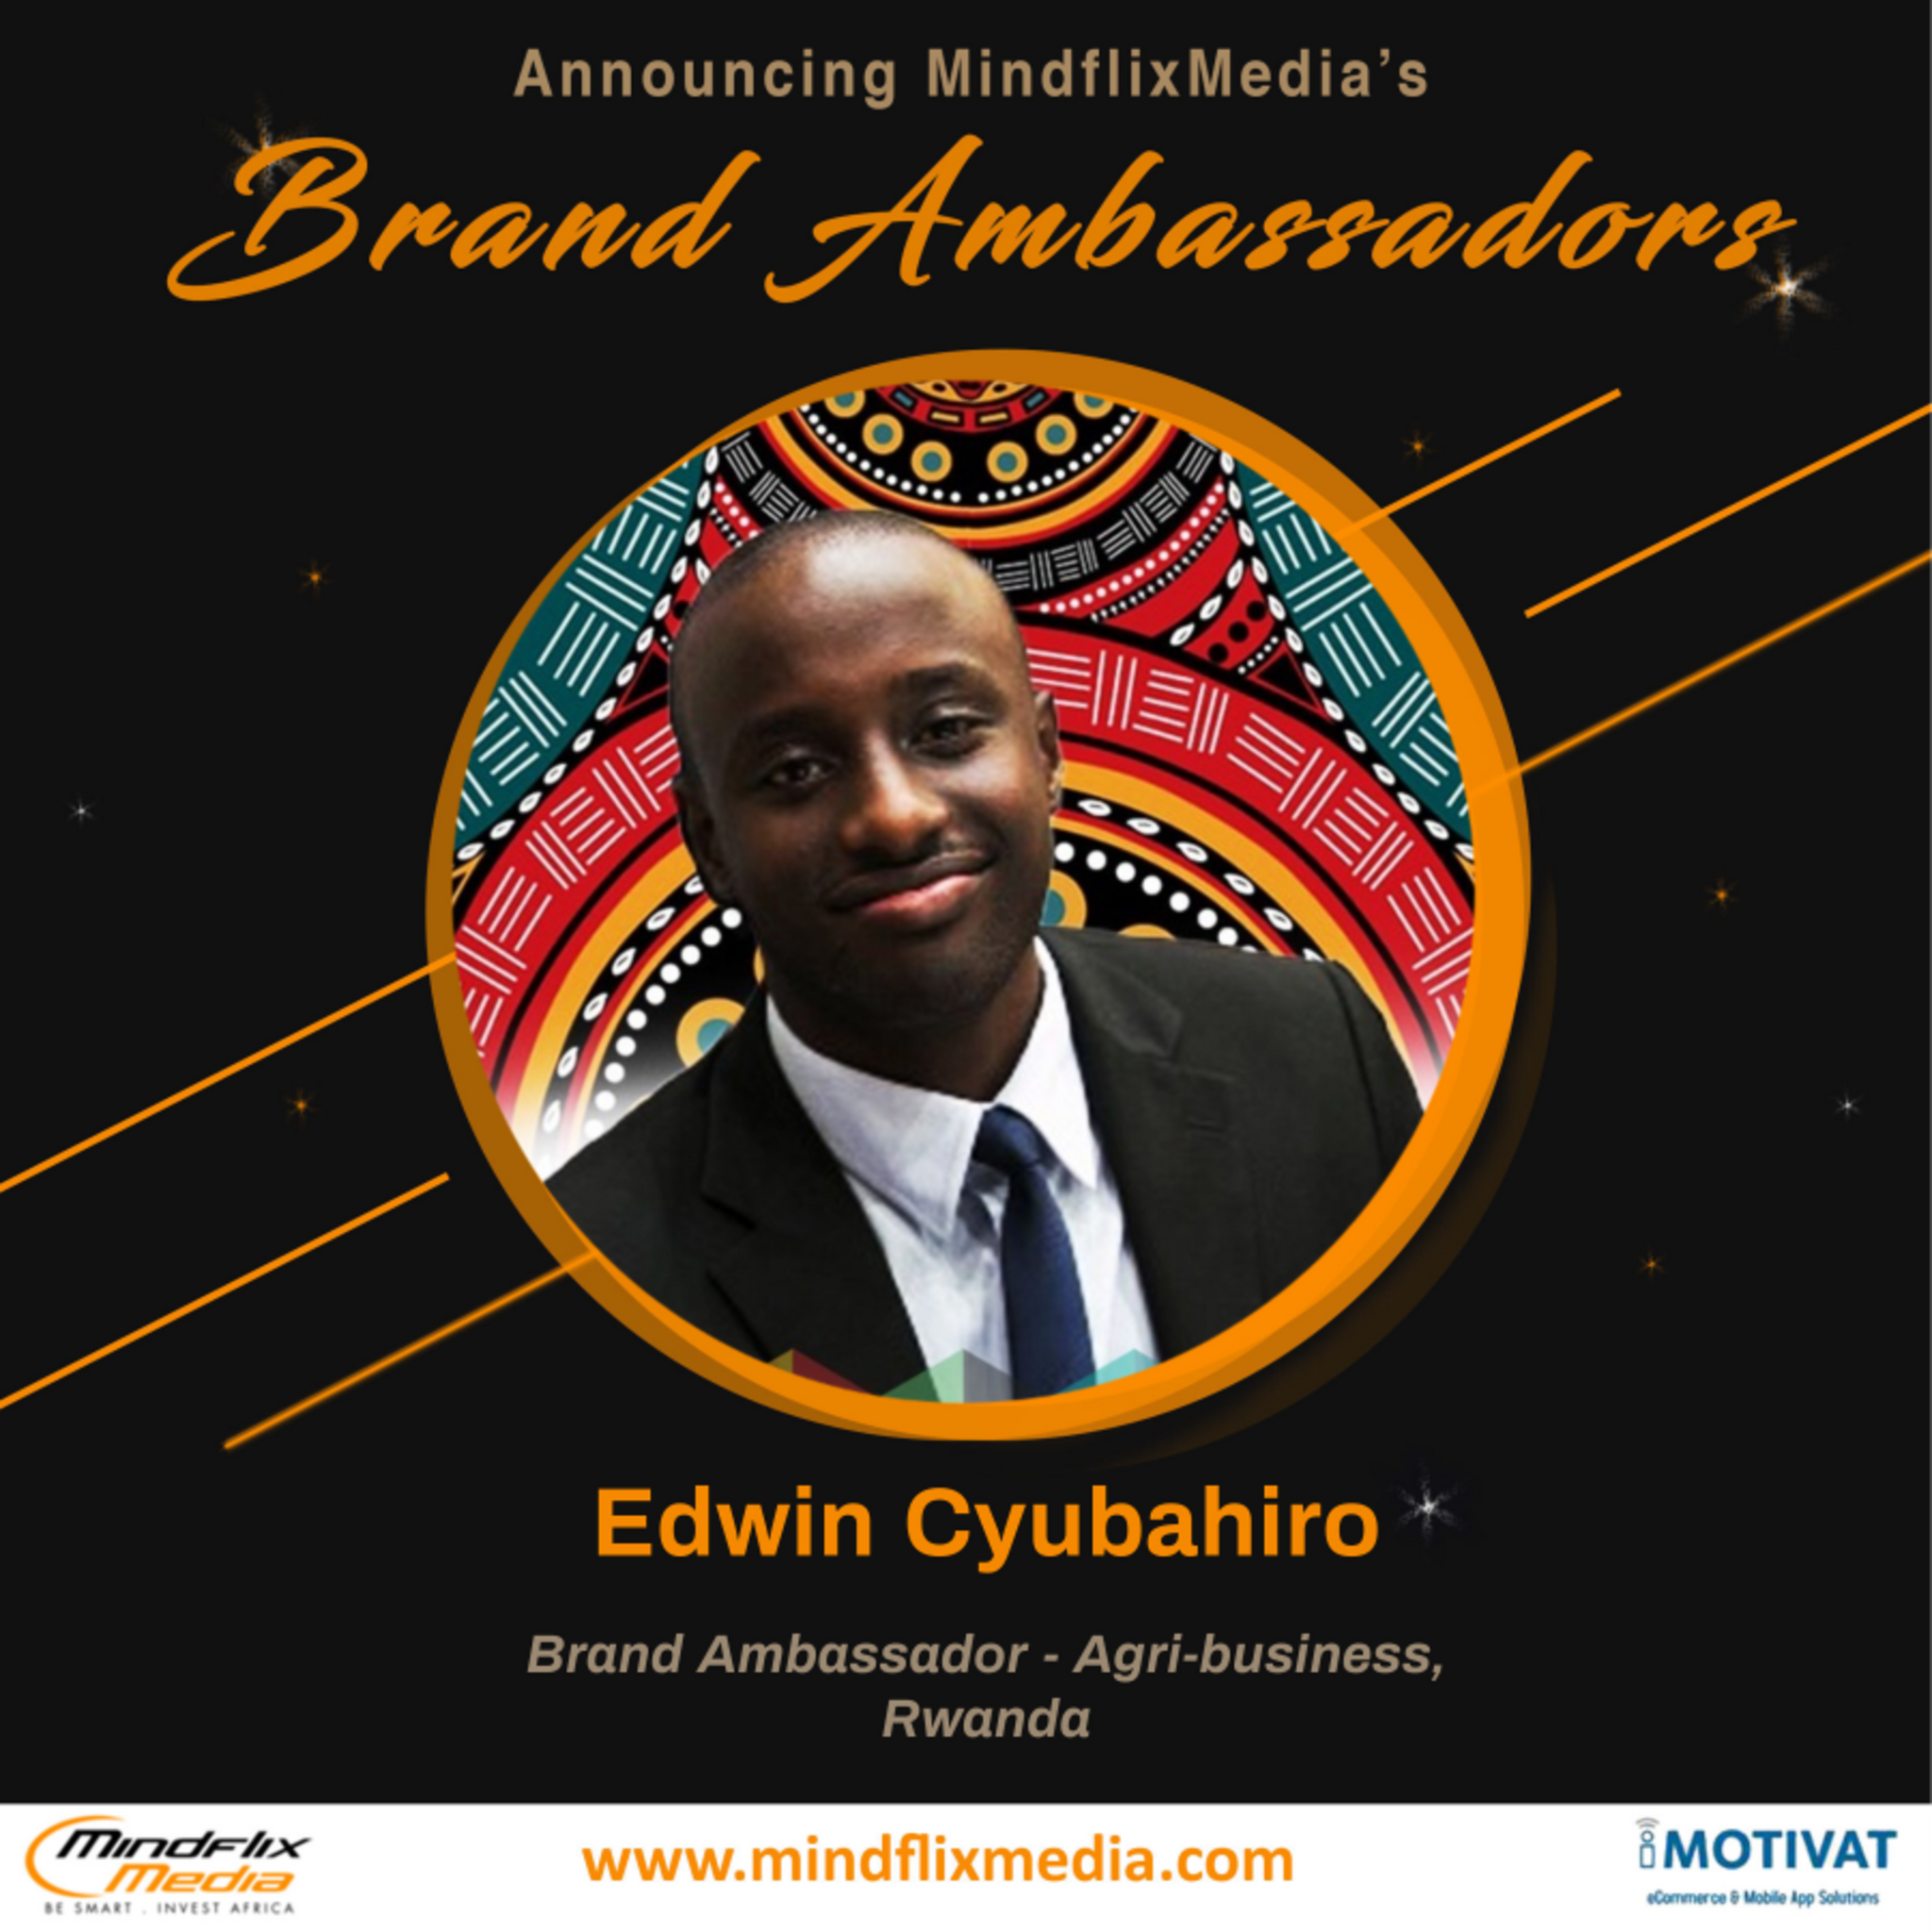 Edwin Cyubahiro - Brand Ambassador - Agri-business, Rwanda